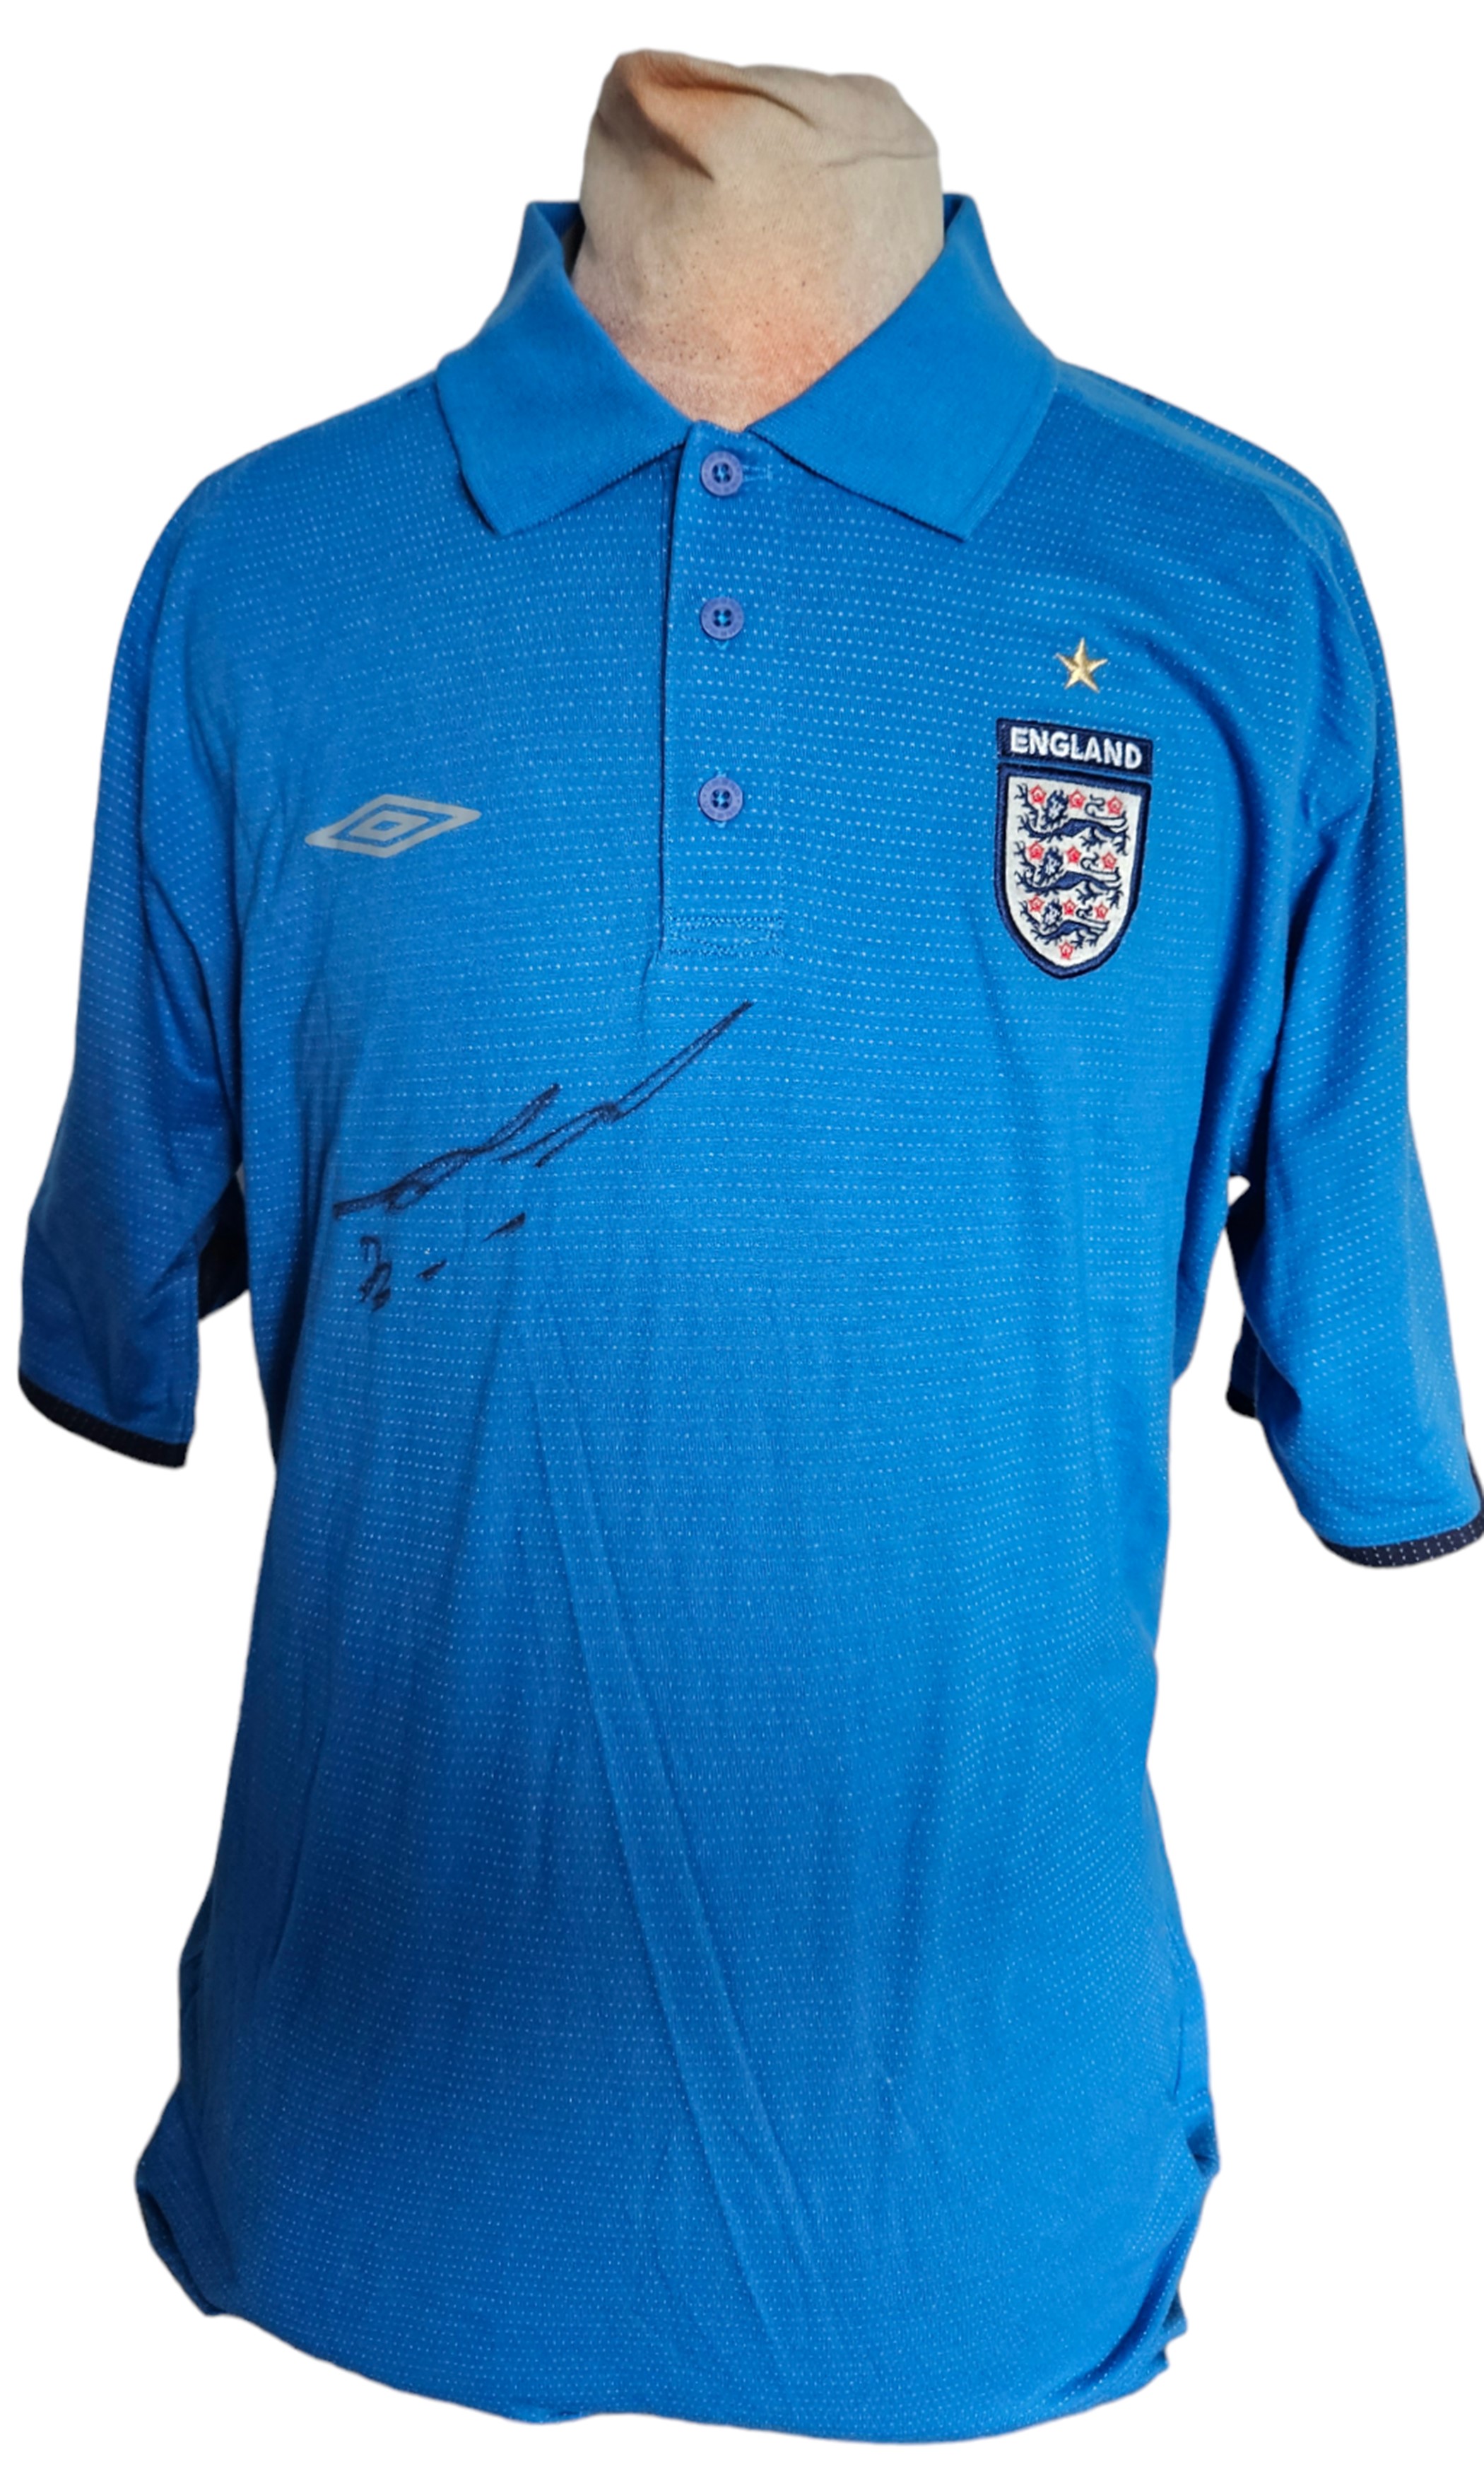 John Terry signed England Away Football T-Shirt Colour New Blue/Dark Navy size Large. Good